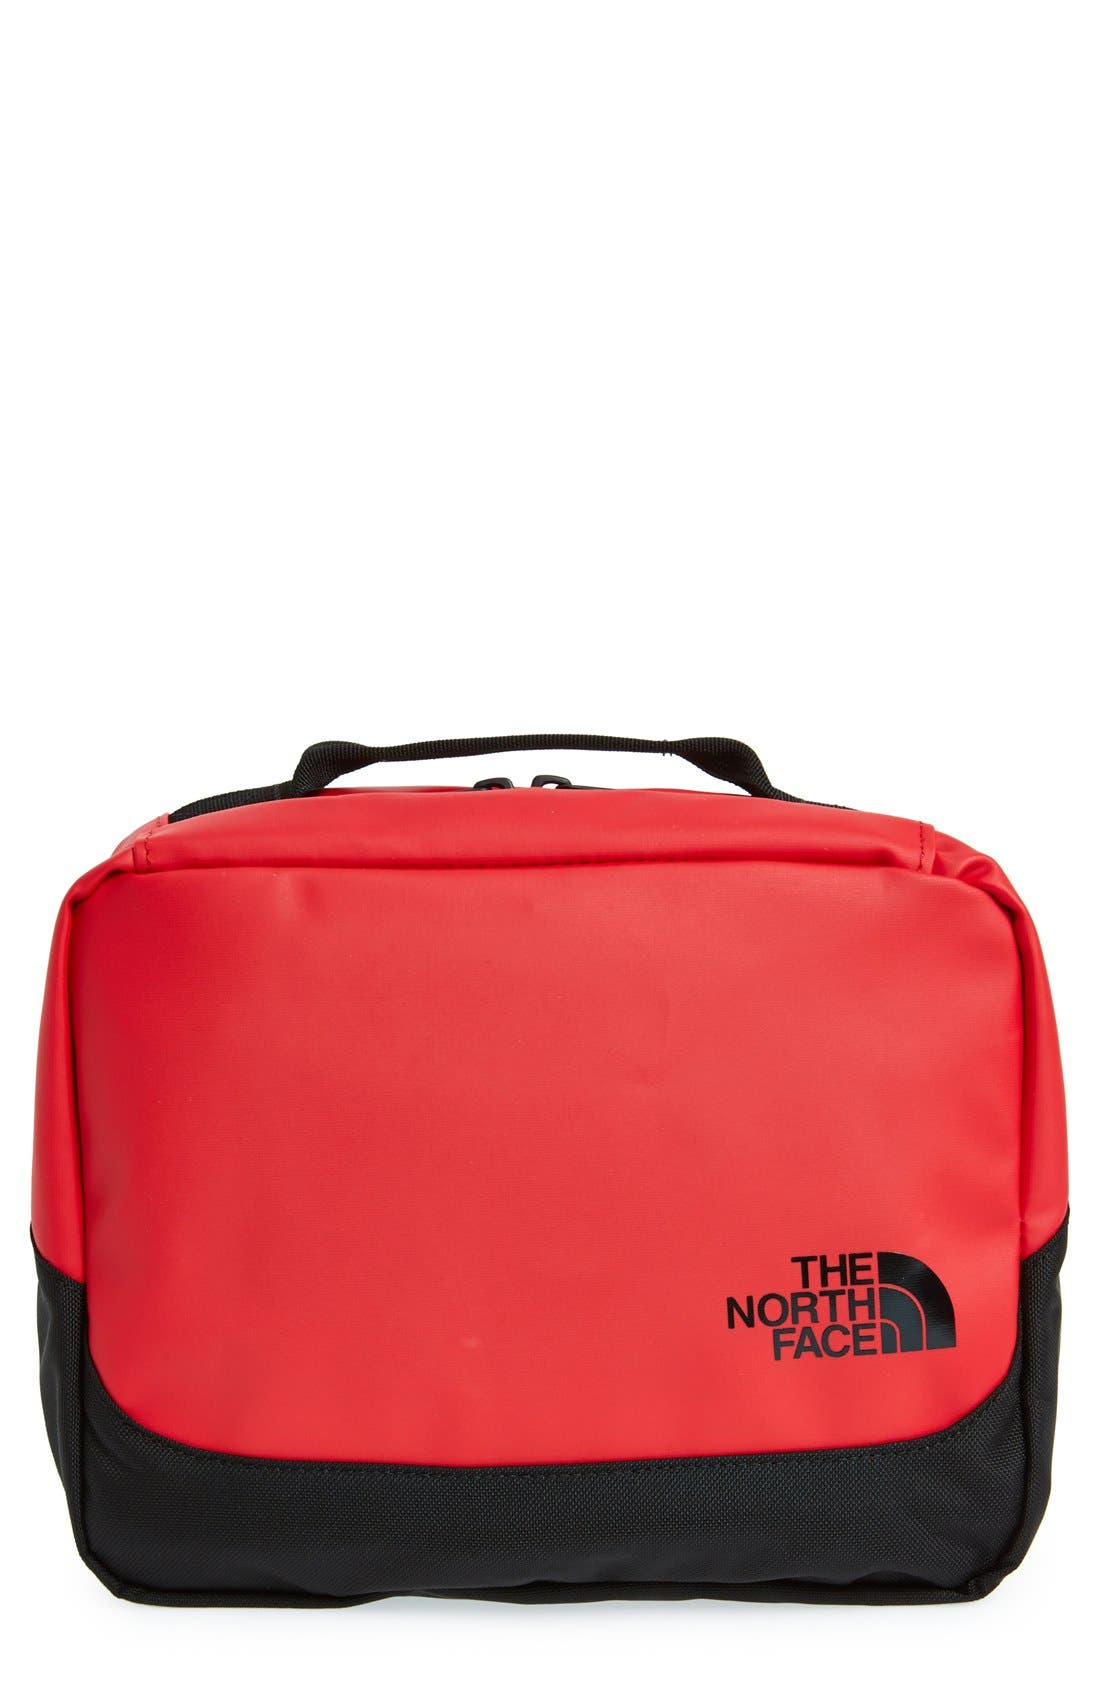 north face travel kit